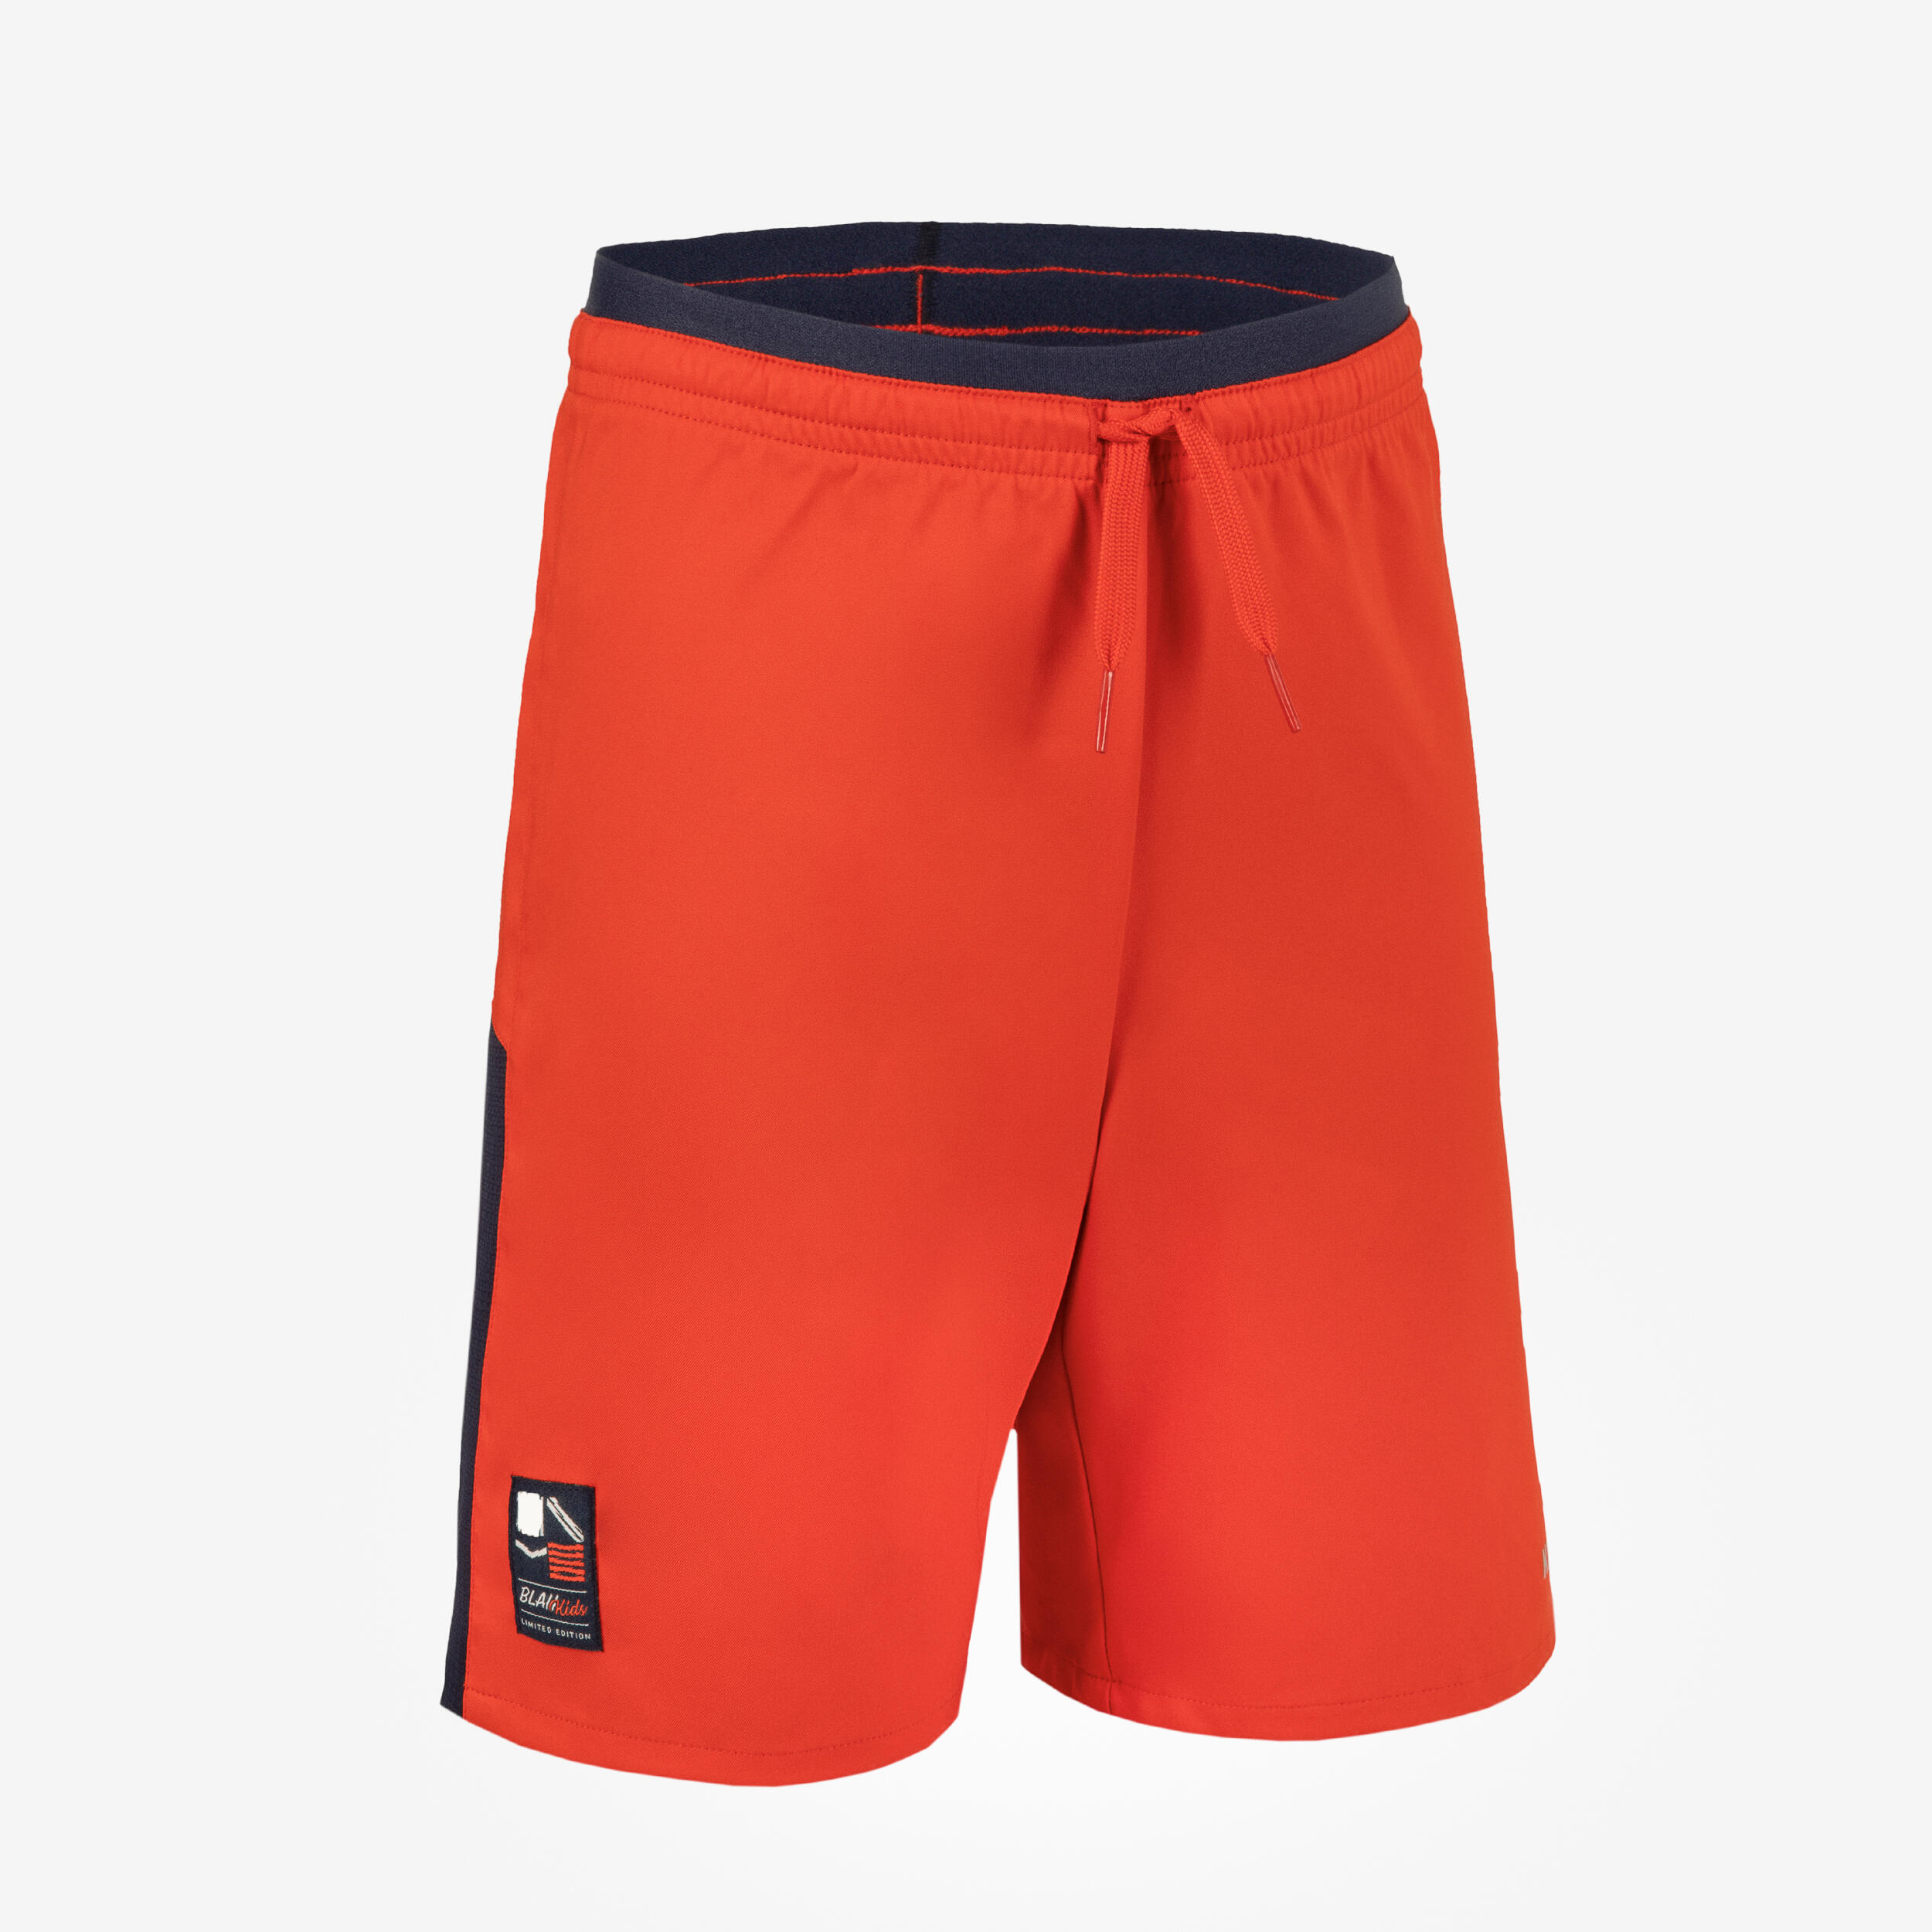 Kids' Football Shorts - Red/Navy 1/6